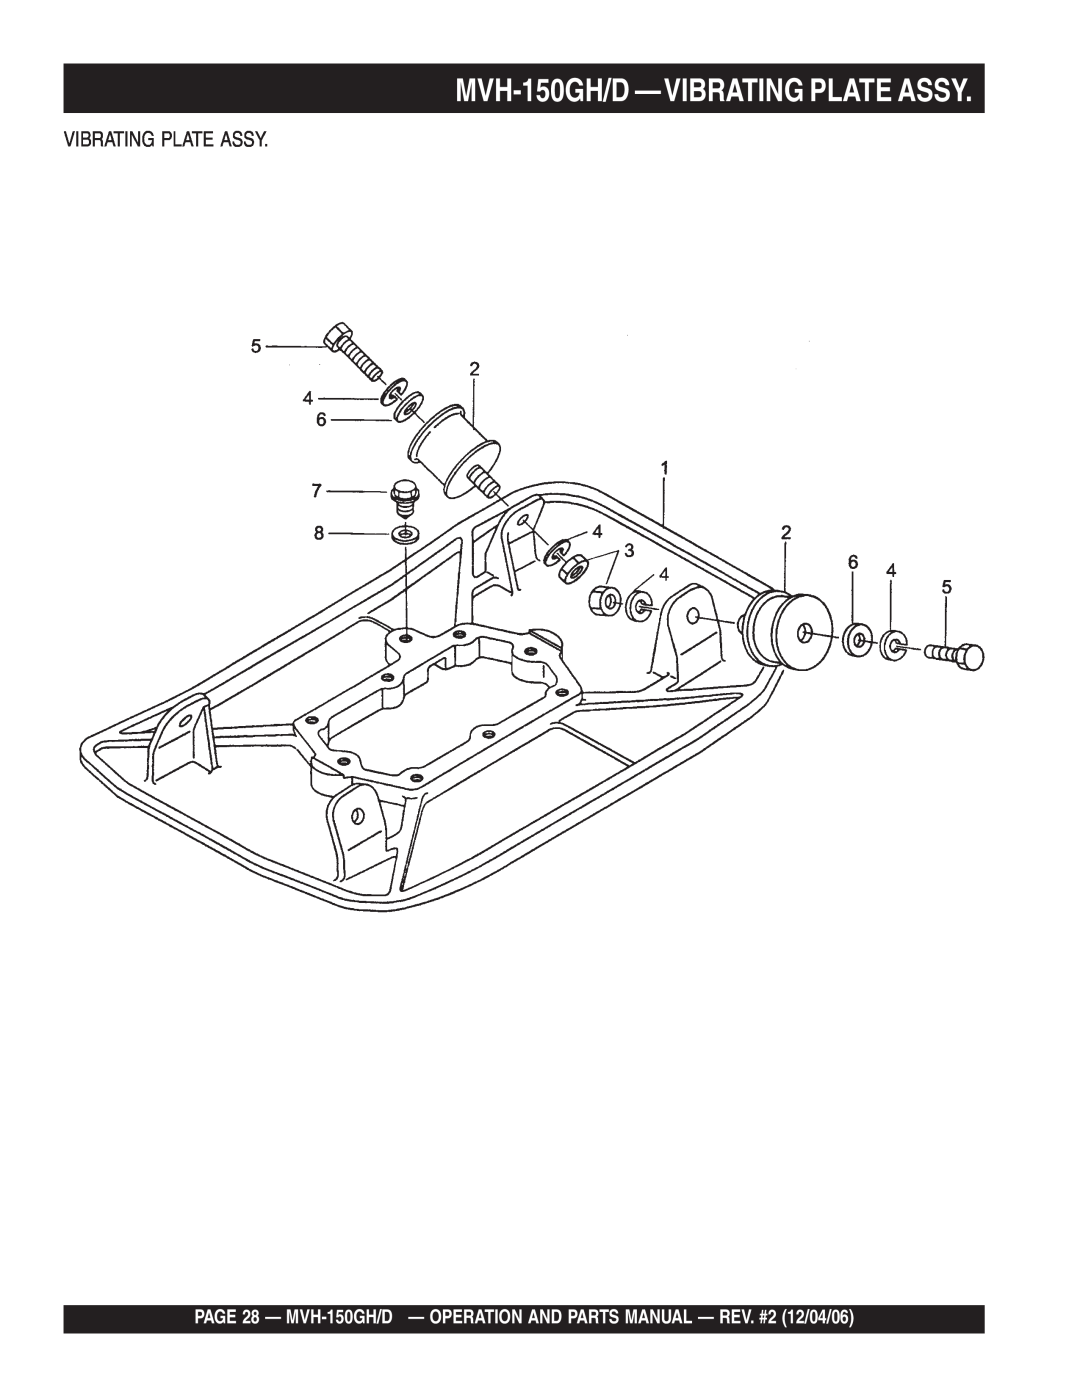 Multiquip MVH-150D manual MVH-150GH/D -VIBRATING PLATE ASSY, Vibrating Plate Assy 